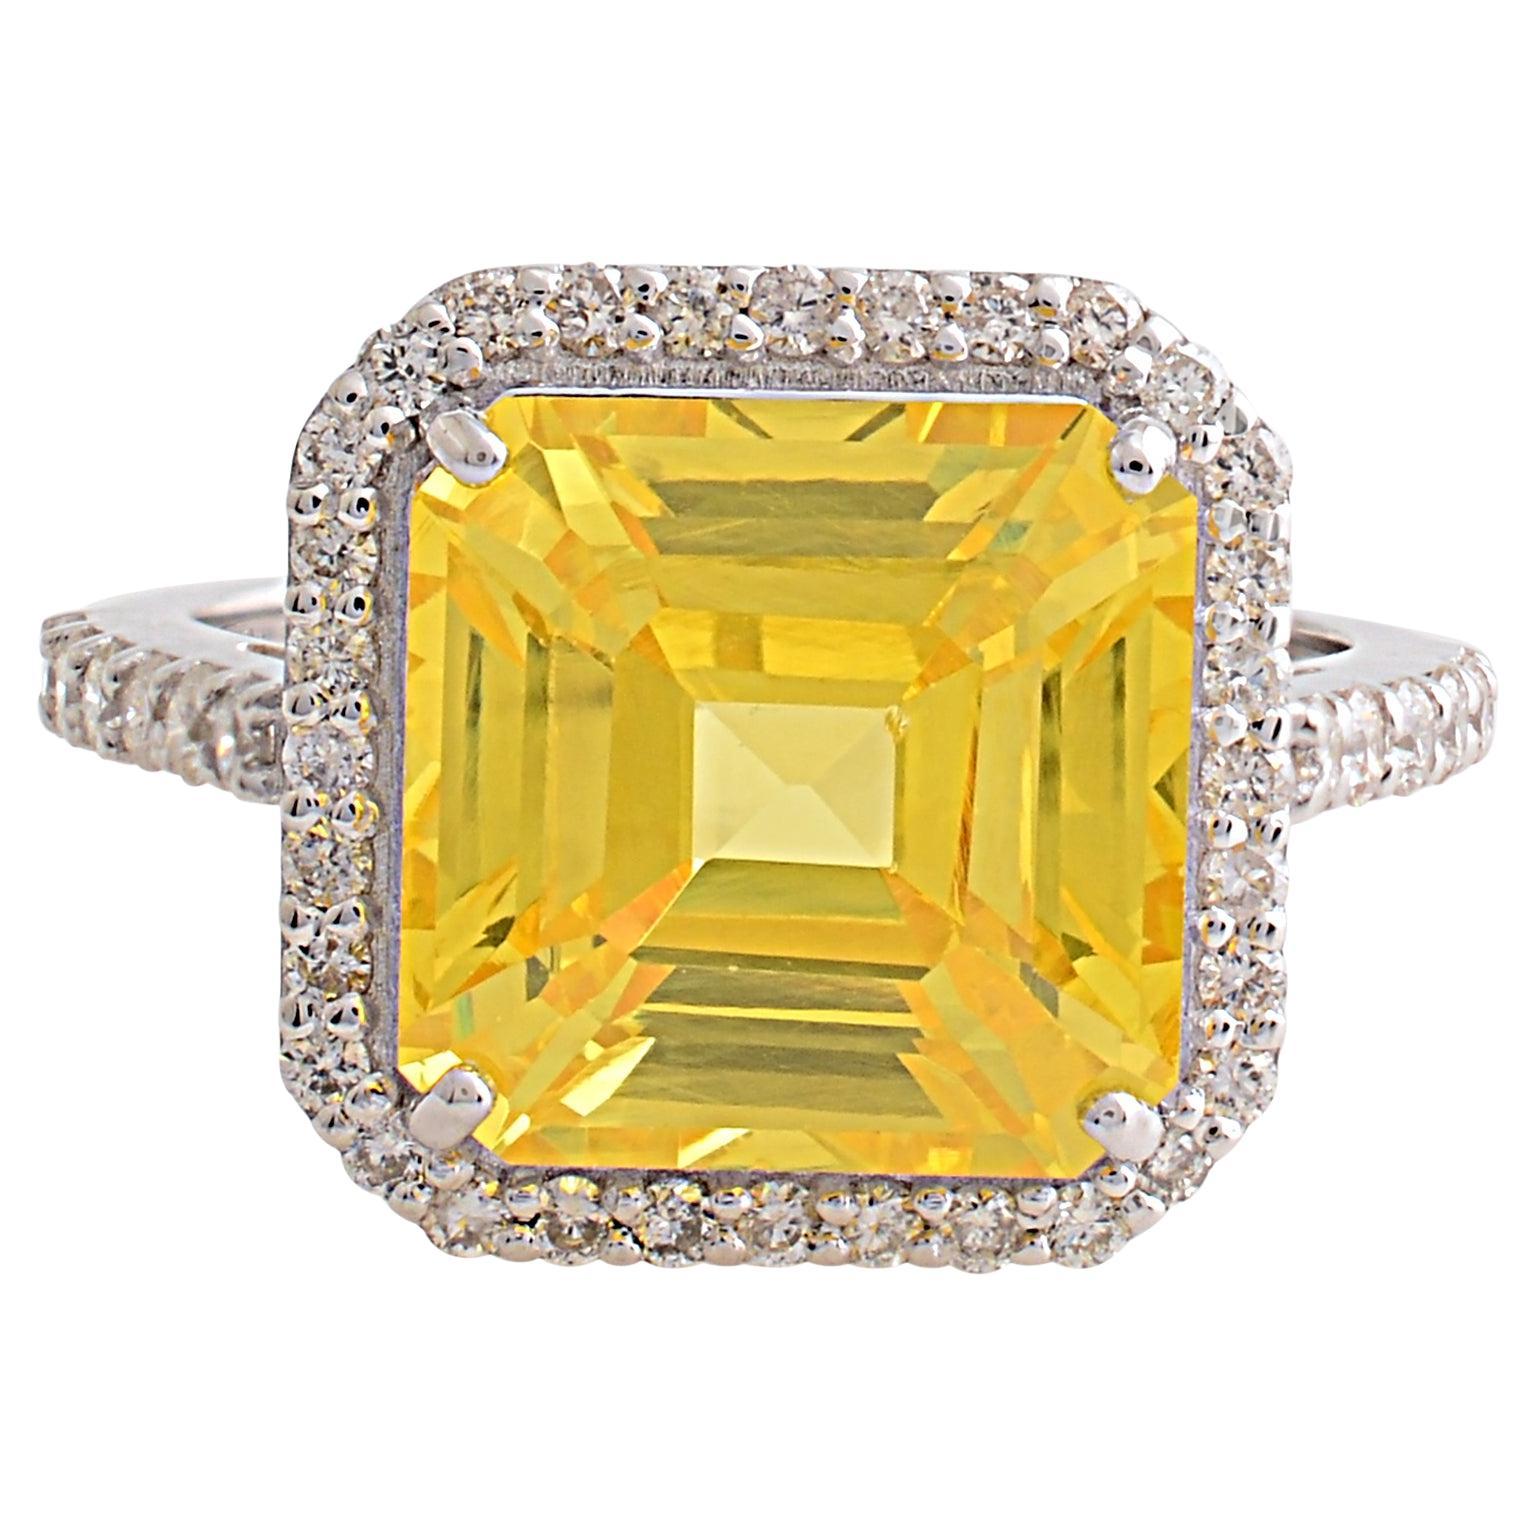 Yellow Processed Gemstone Cocktail Ring Diamond Pave 18k White Gold Fine Jewelry